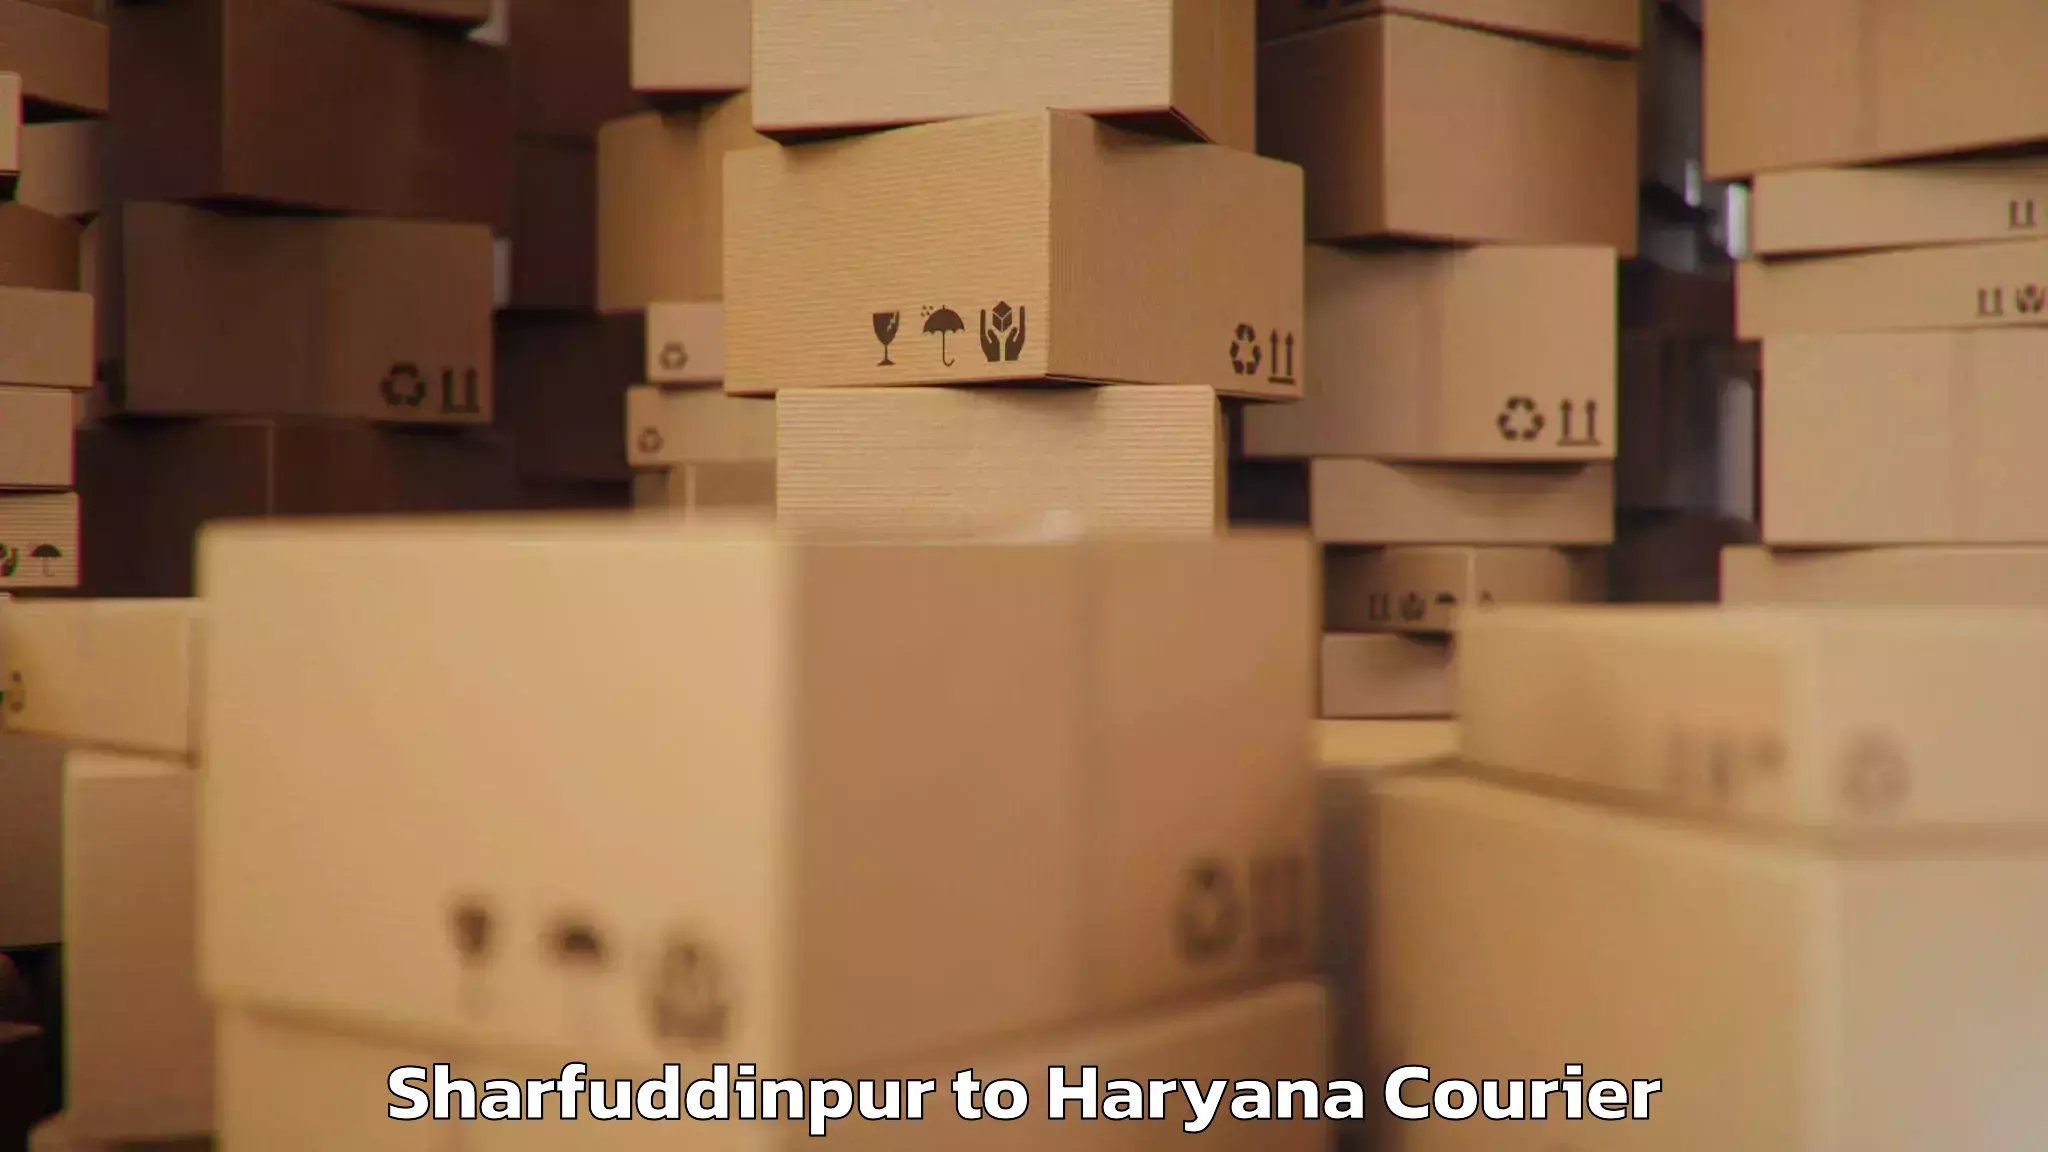 Baggage shipping service Sharfuddinpur to Hansi